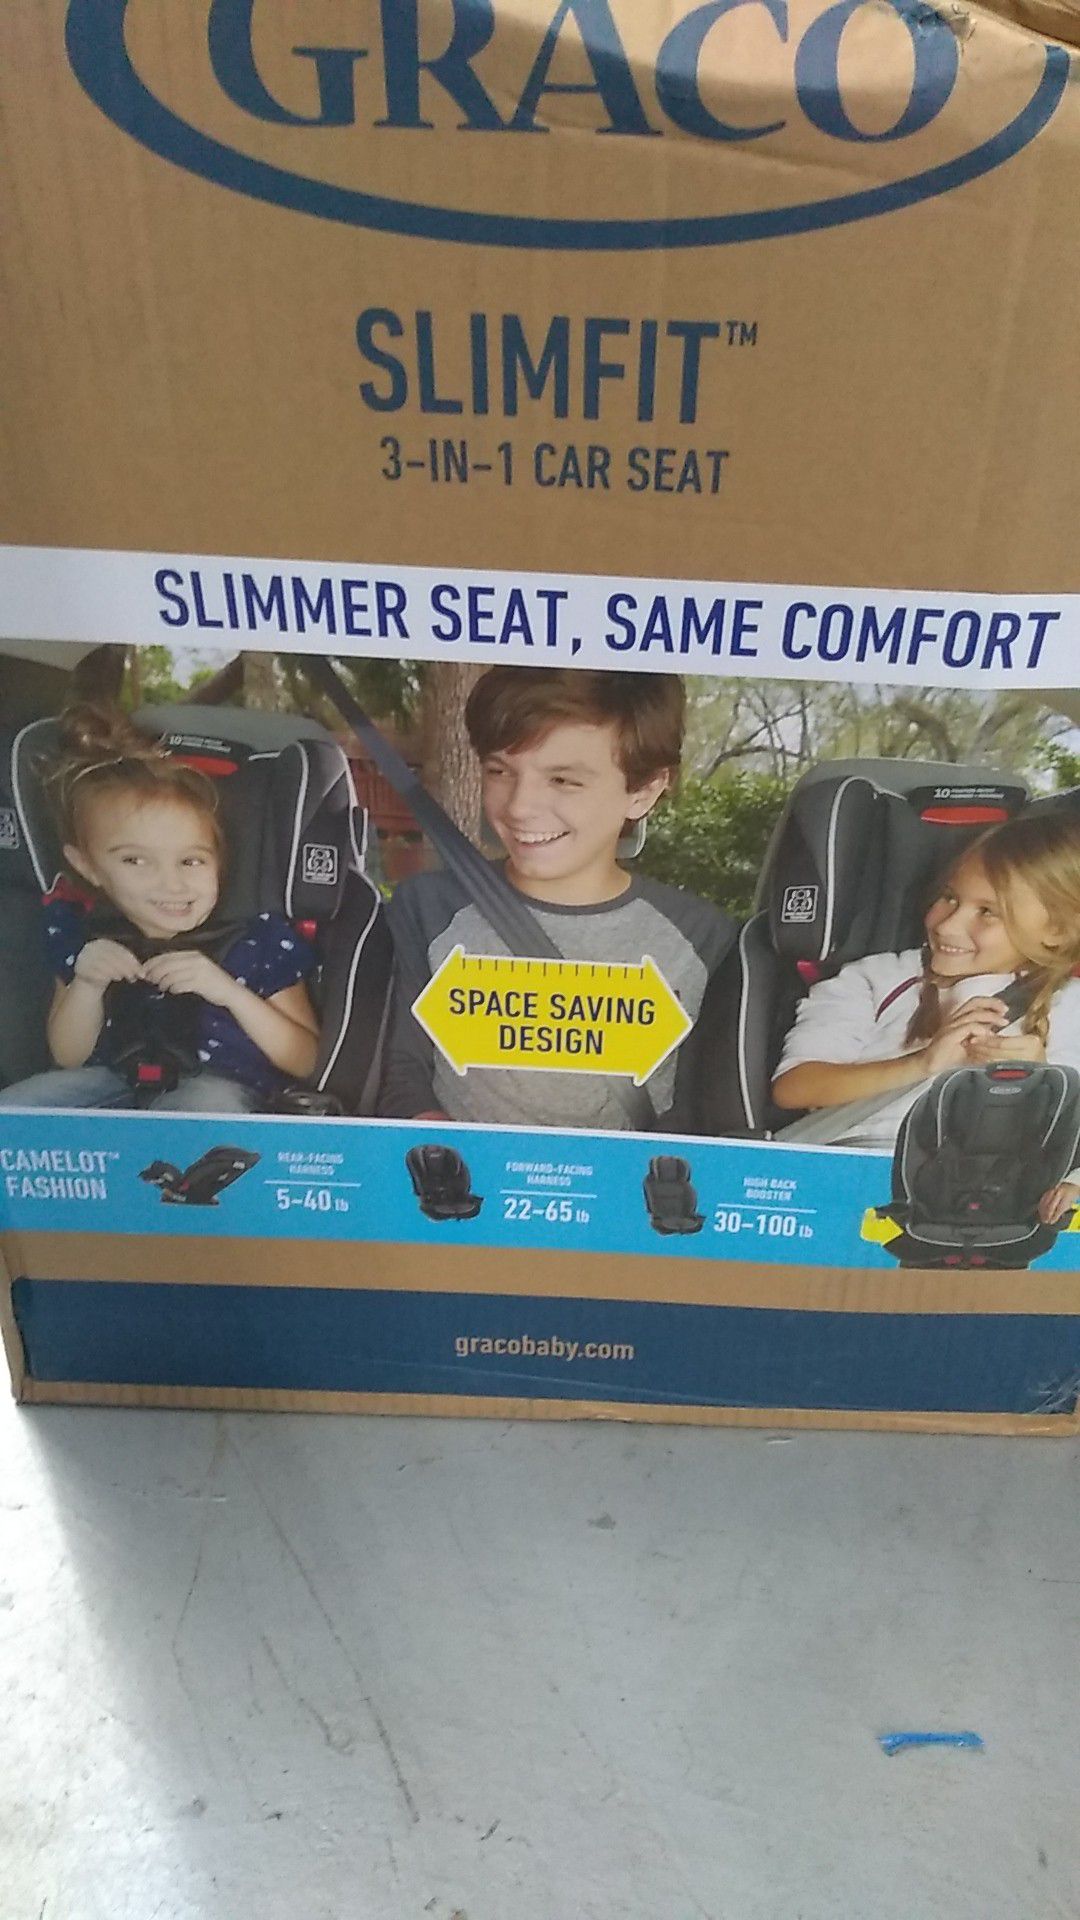 Graco SlimFit 3-in-1 car seat